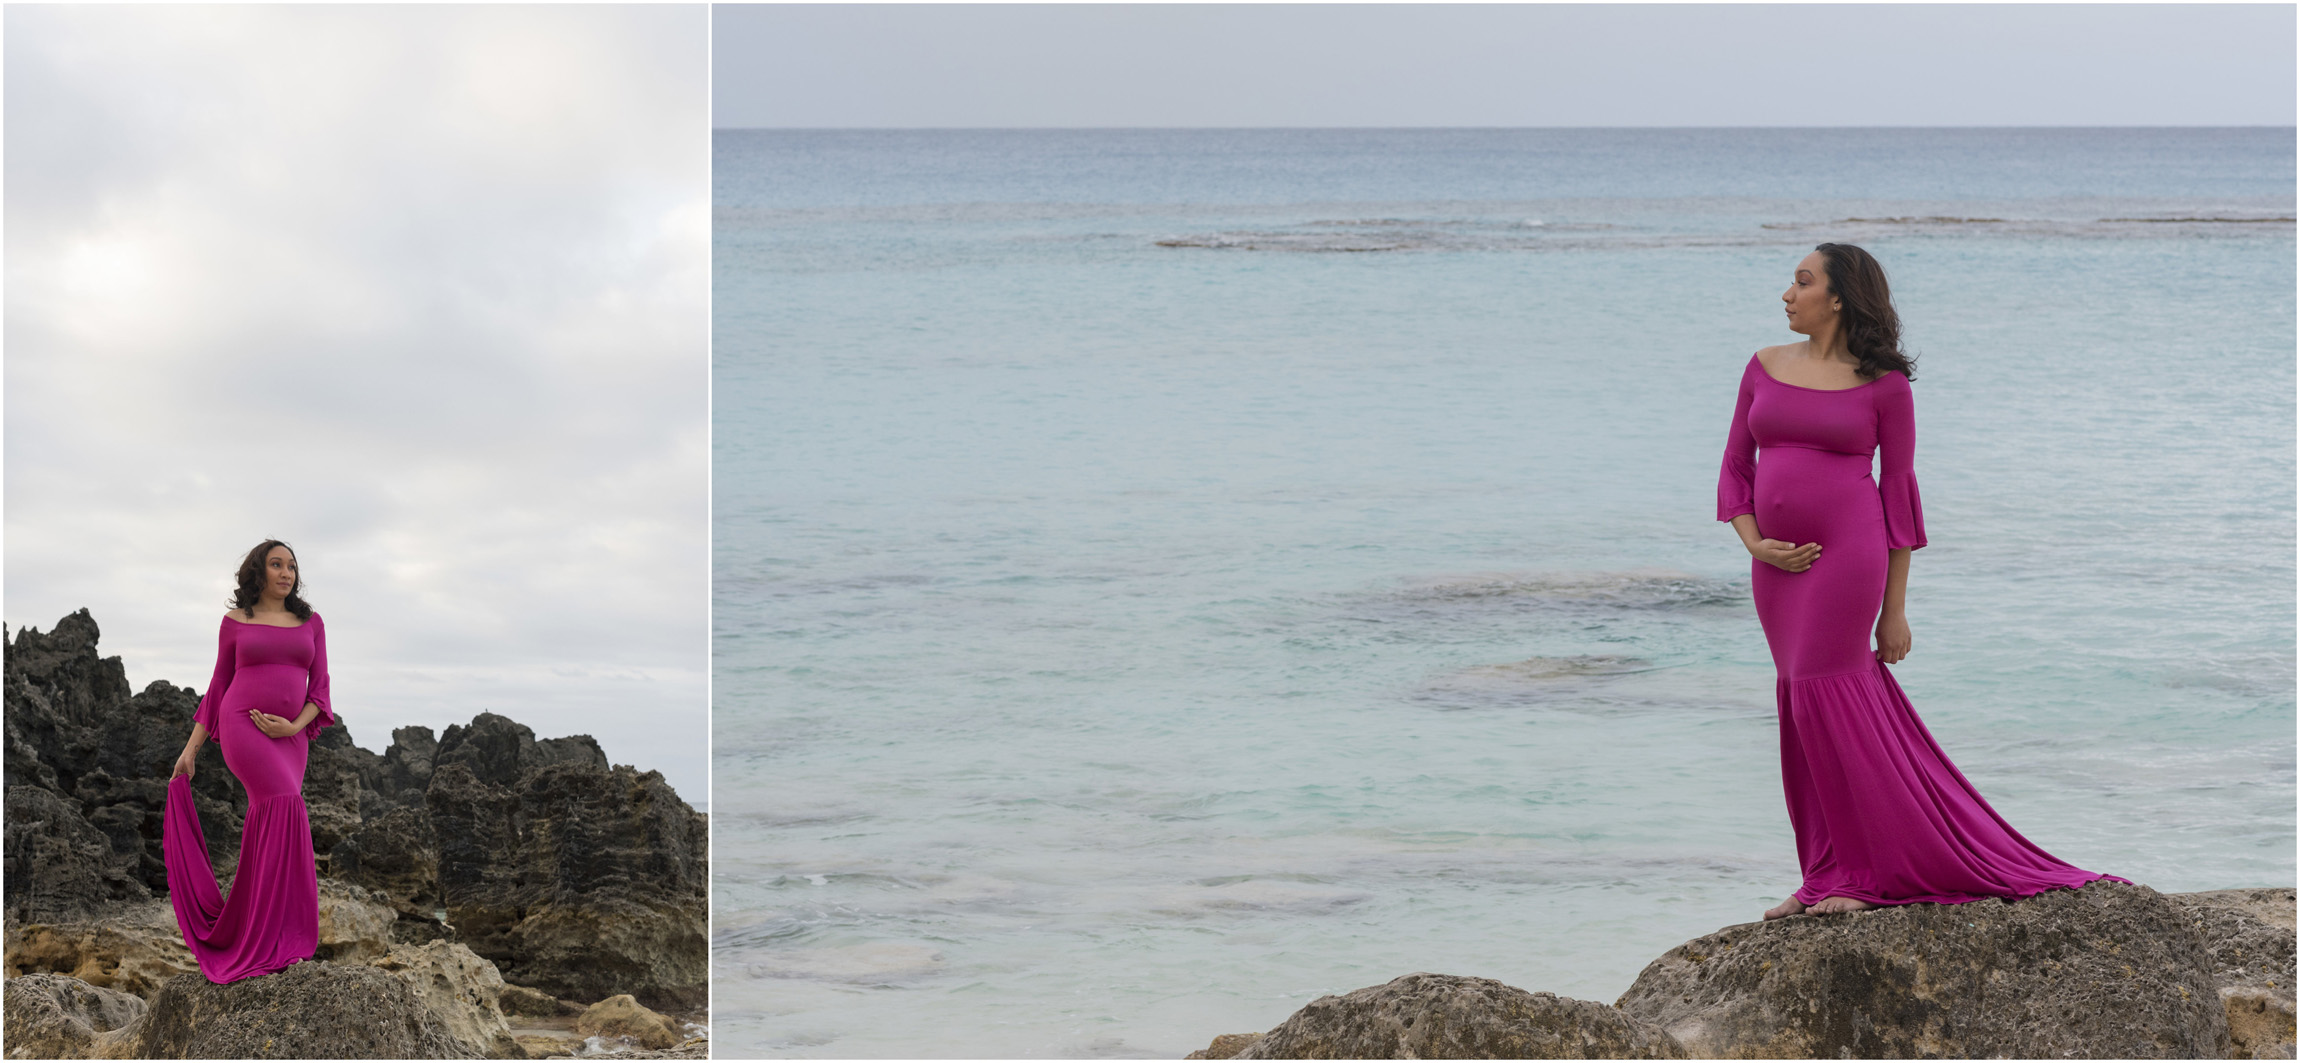 ©FianderFoto_Bermuda Maternity Photographer_Church Bay Beach_Tiffany_004.jpg